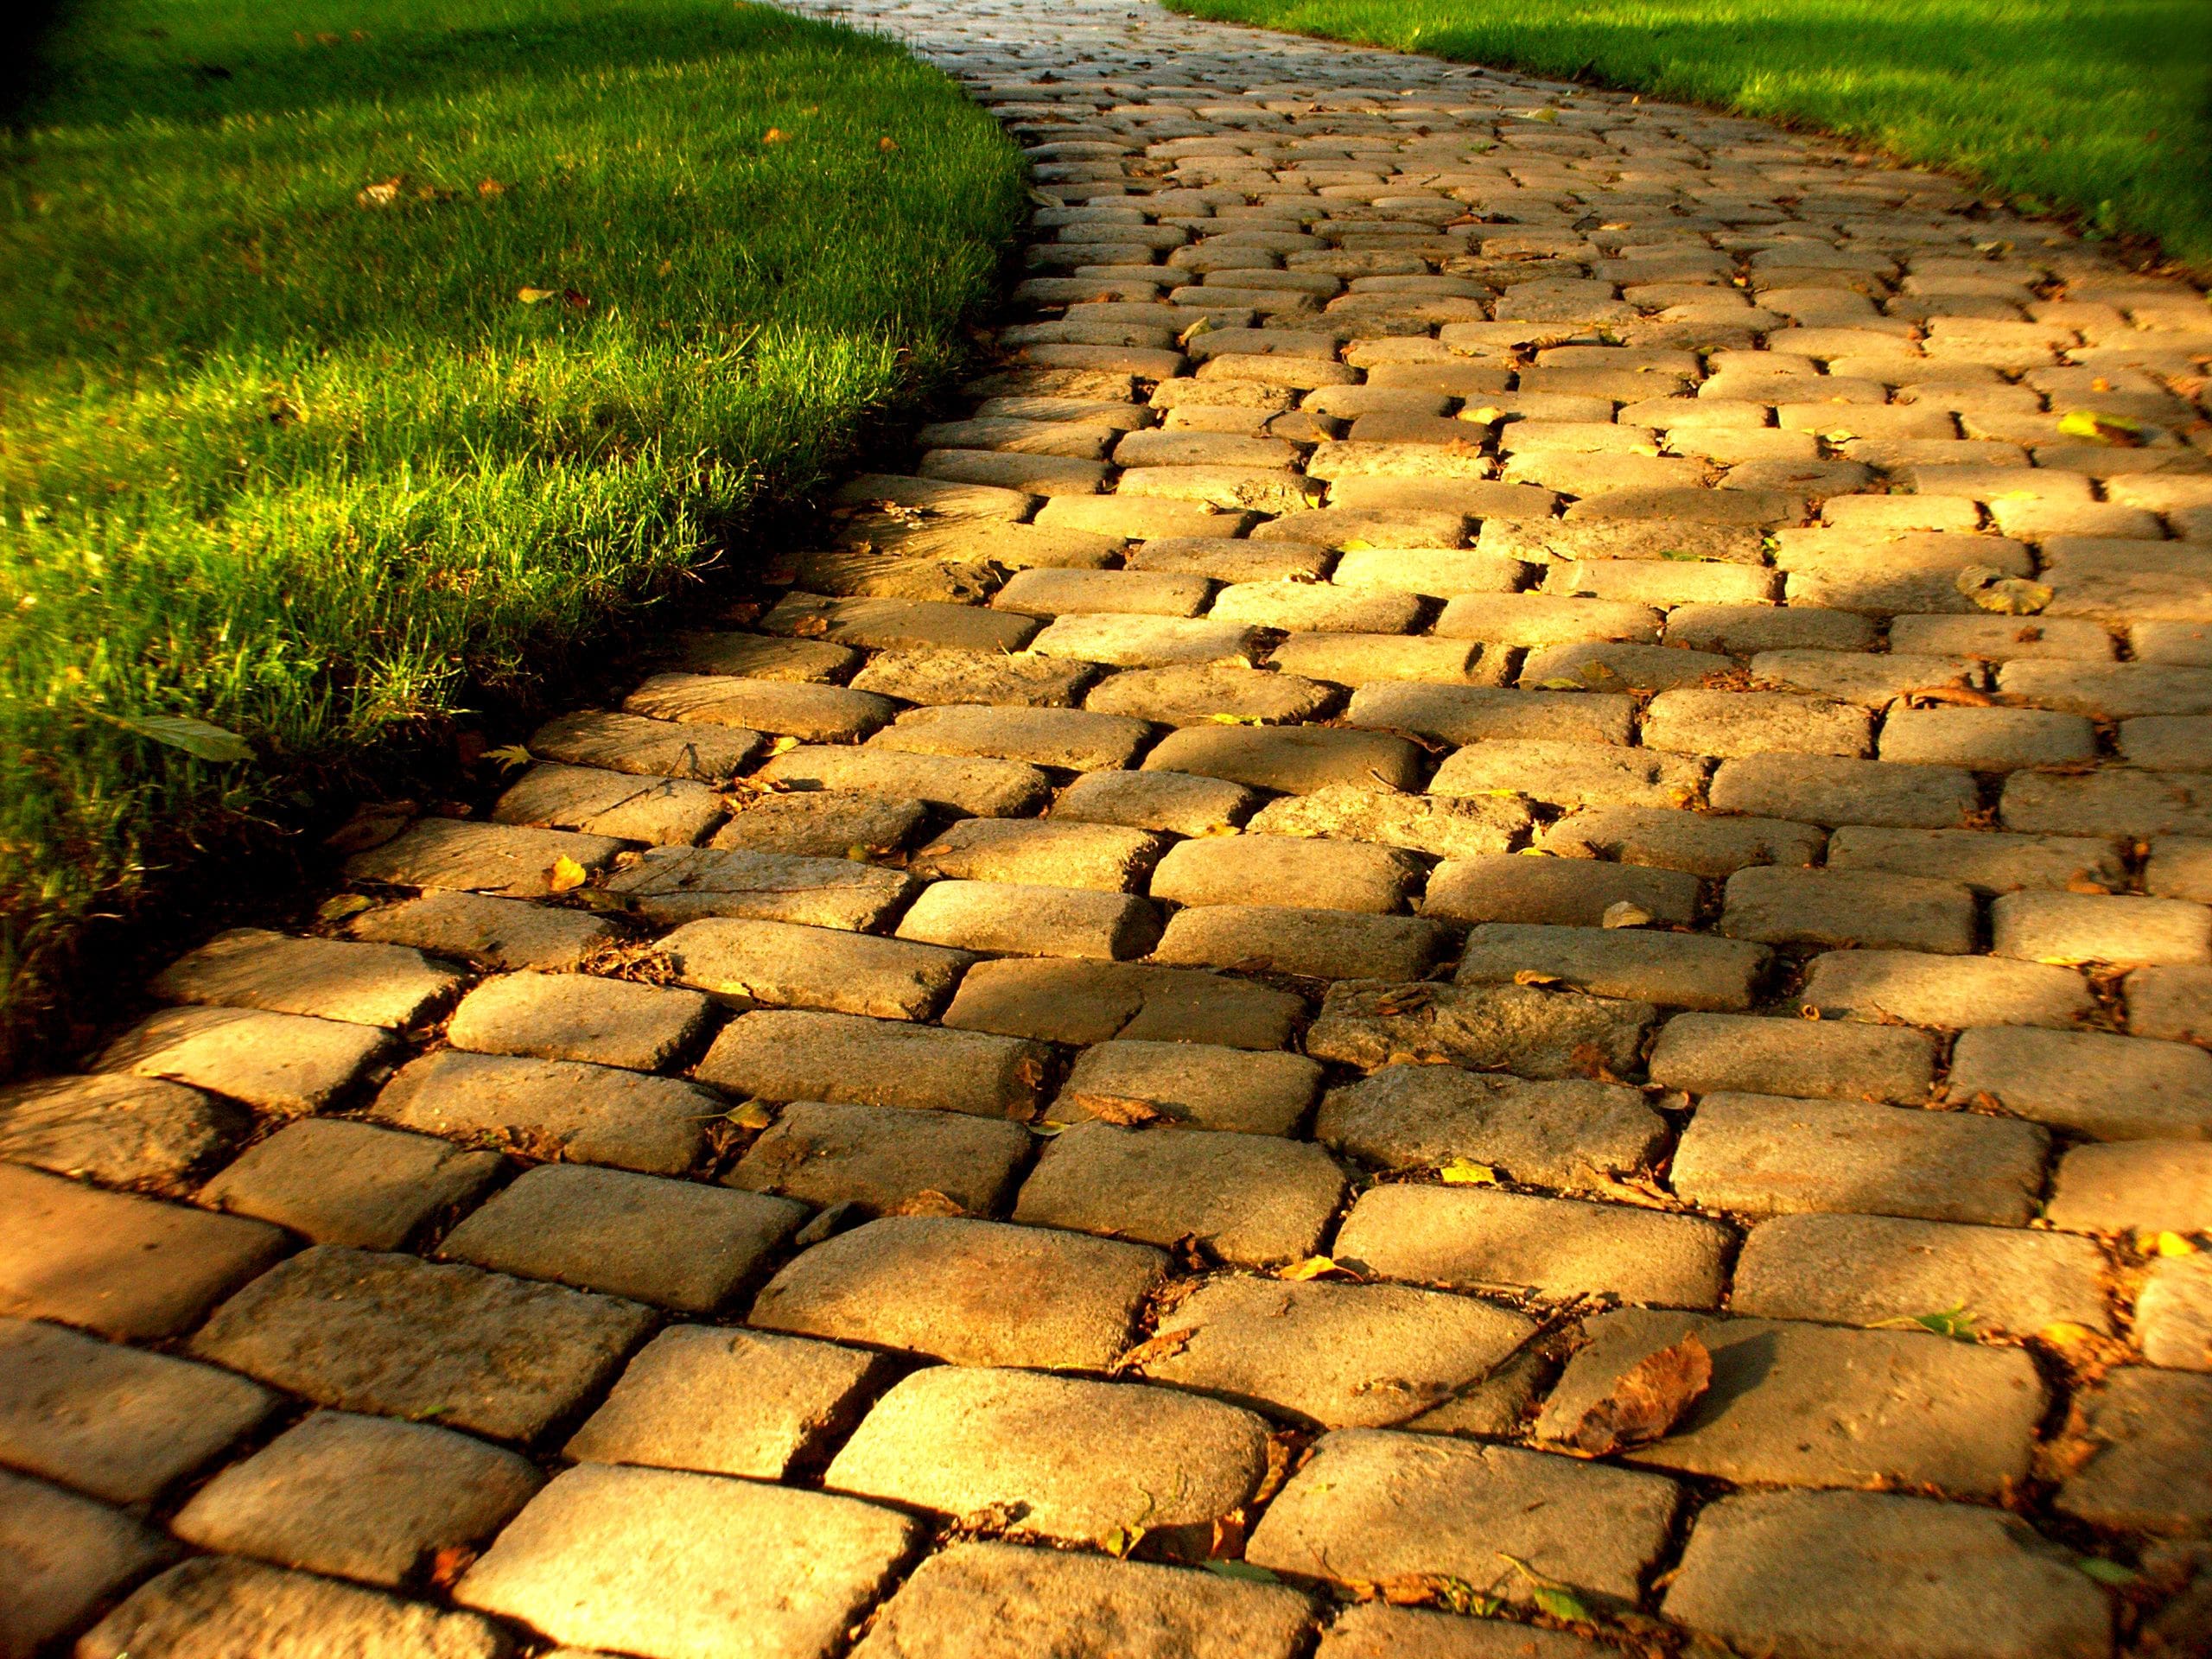 The yellow brick road representing Dorothy's customer journey